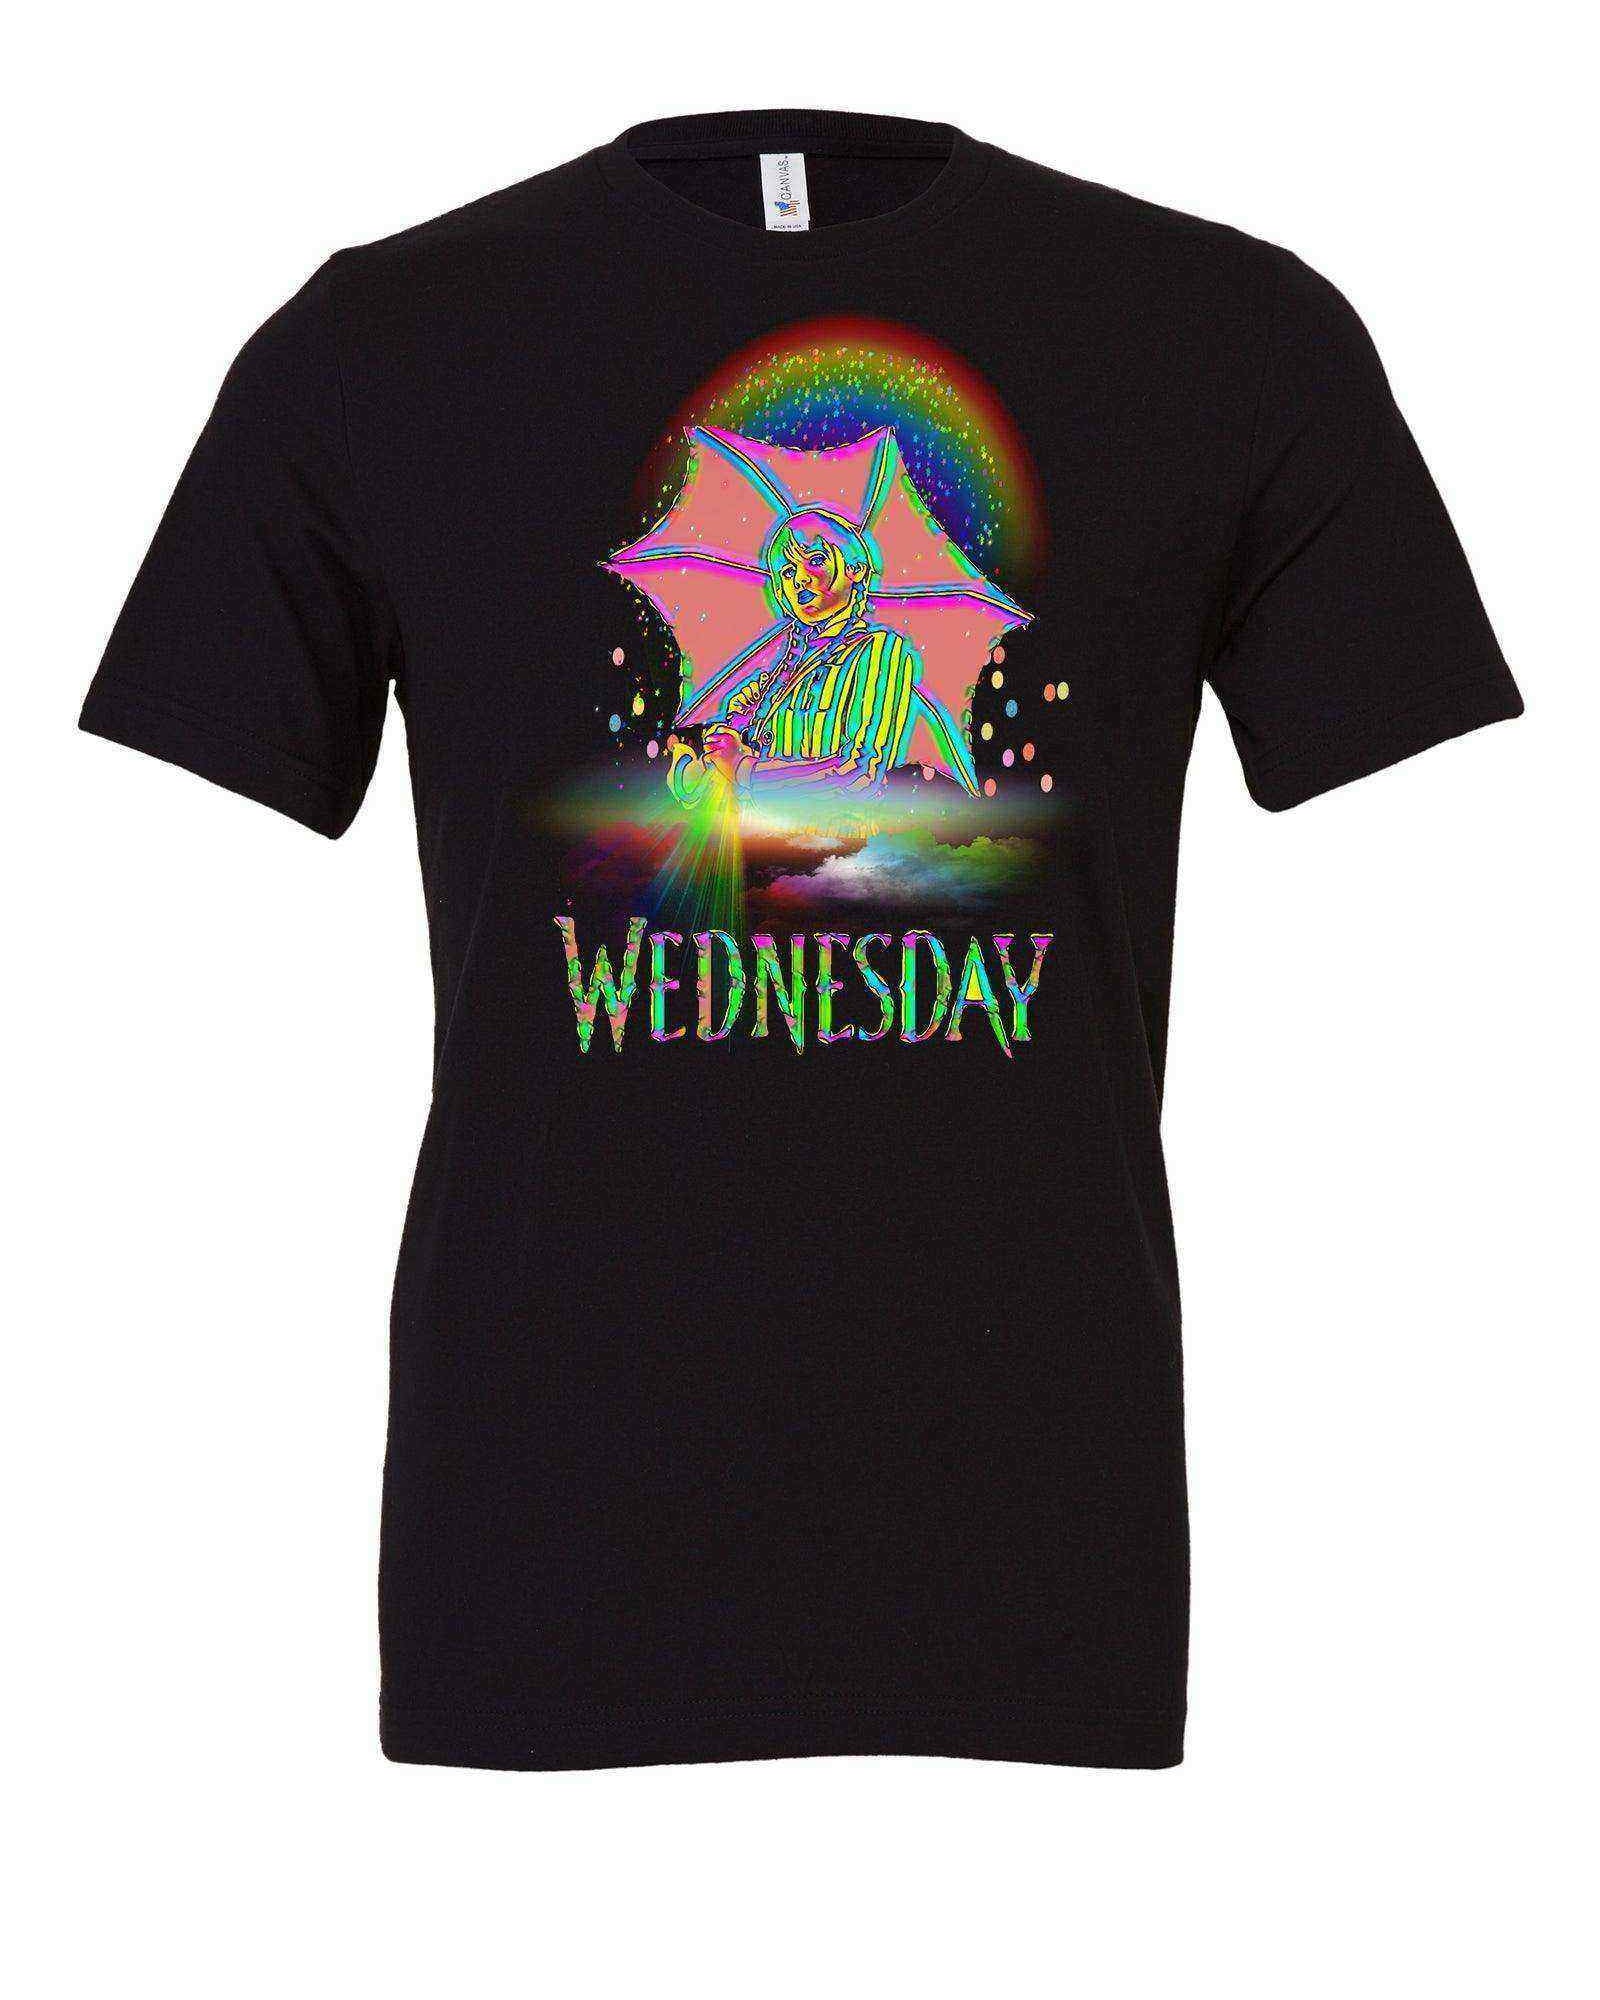 Bright Wednesday Shirt | Umbrella Girl Shirt | The Addams Shirt - Dylan's Tees